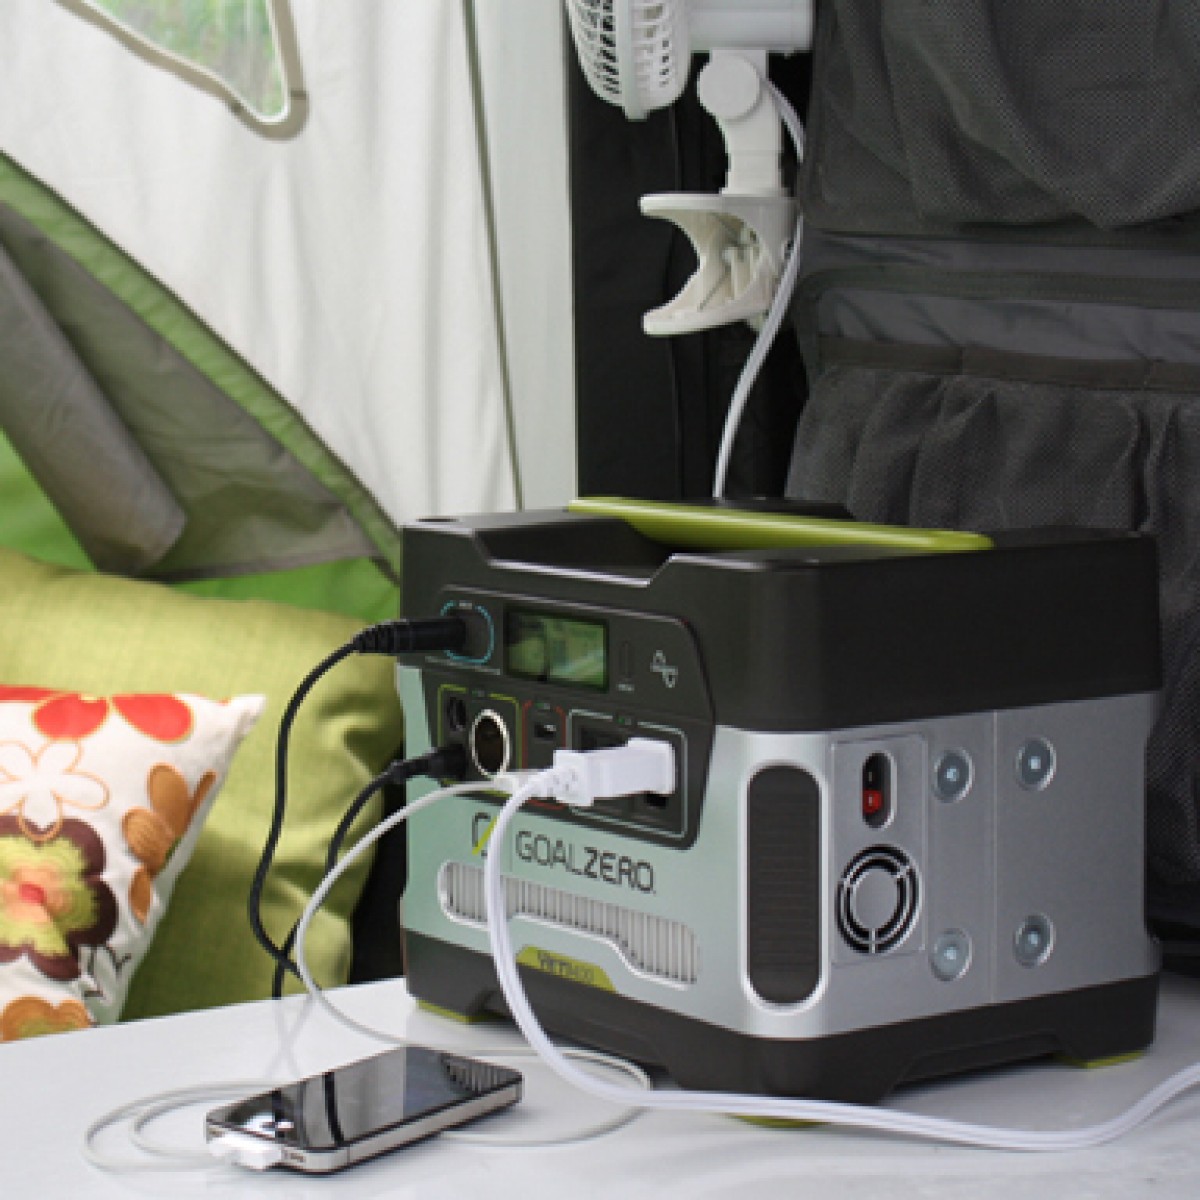 Goal Zero Yeti 400: Portable generator perfect for camping.